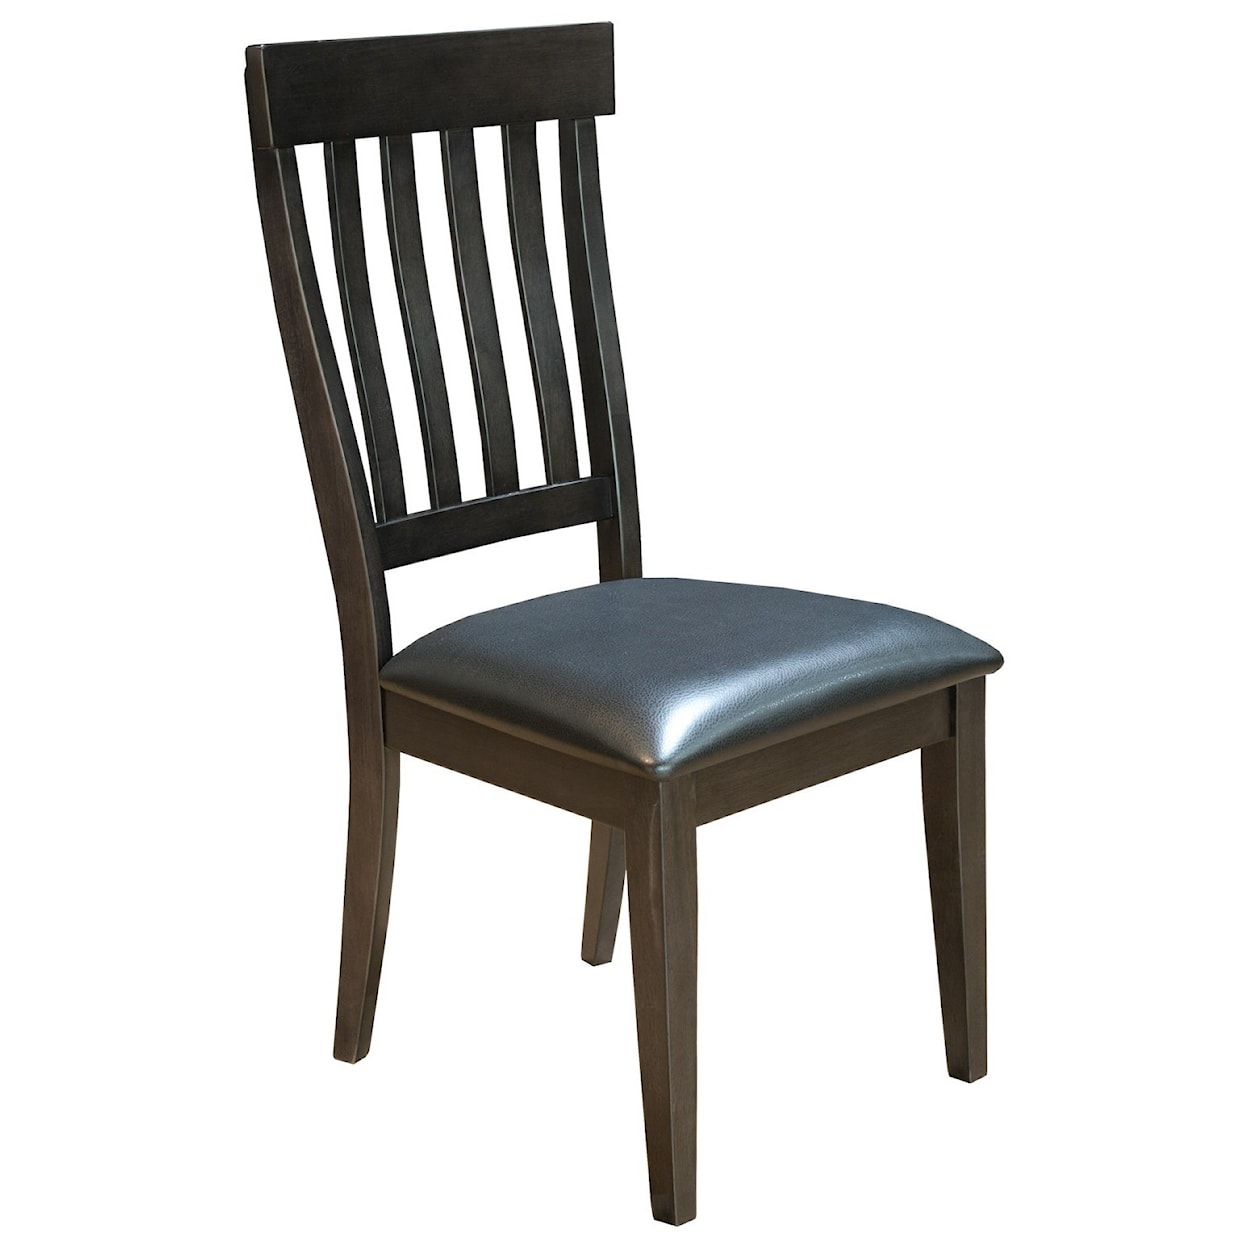 A-A Mariposa Slatback Side Chair